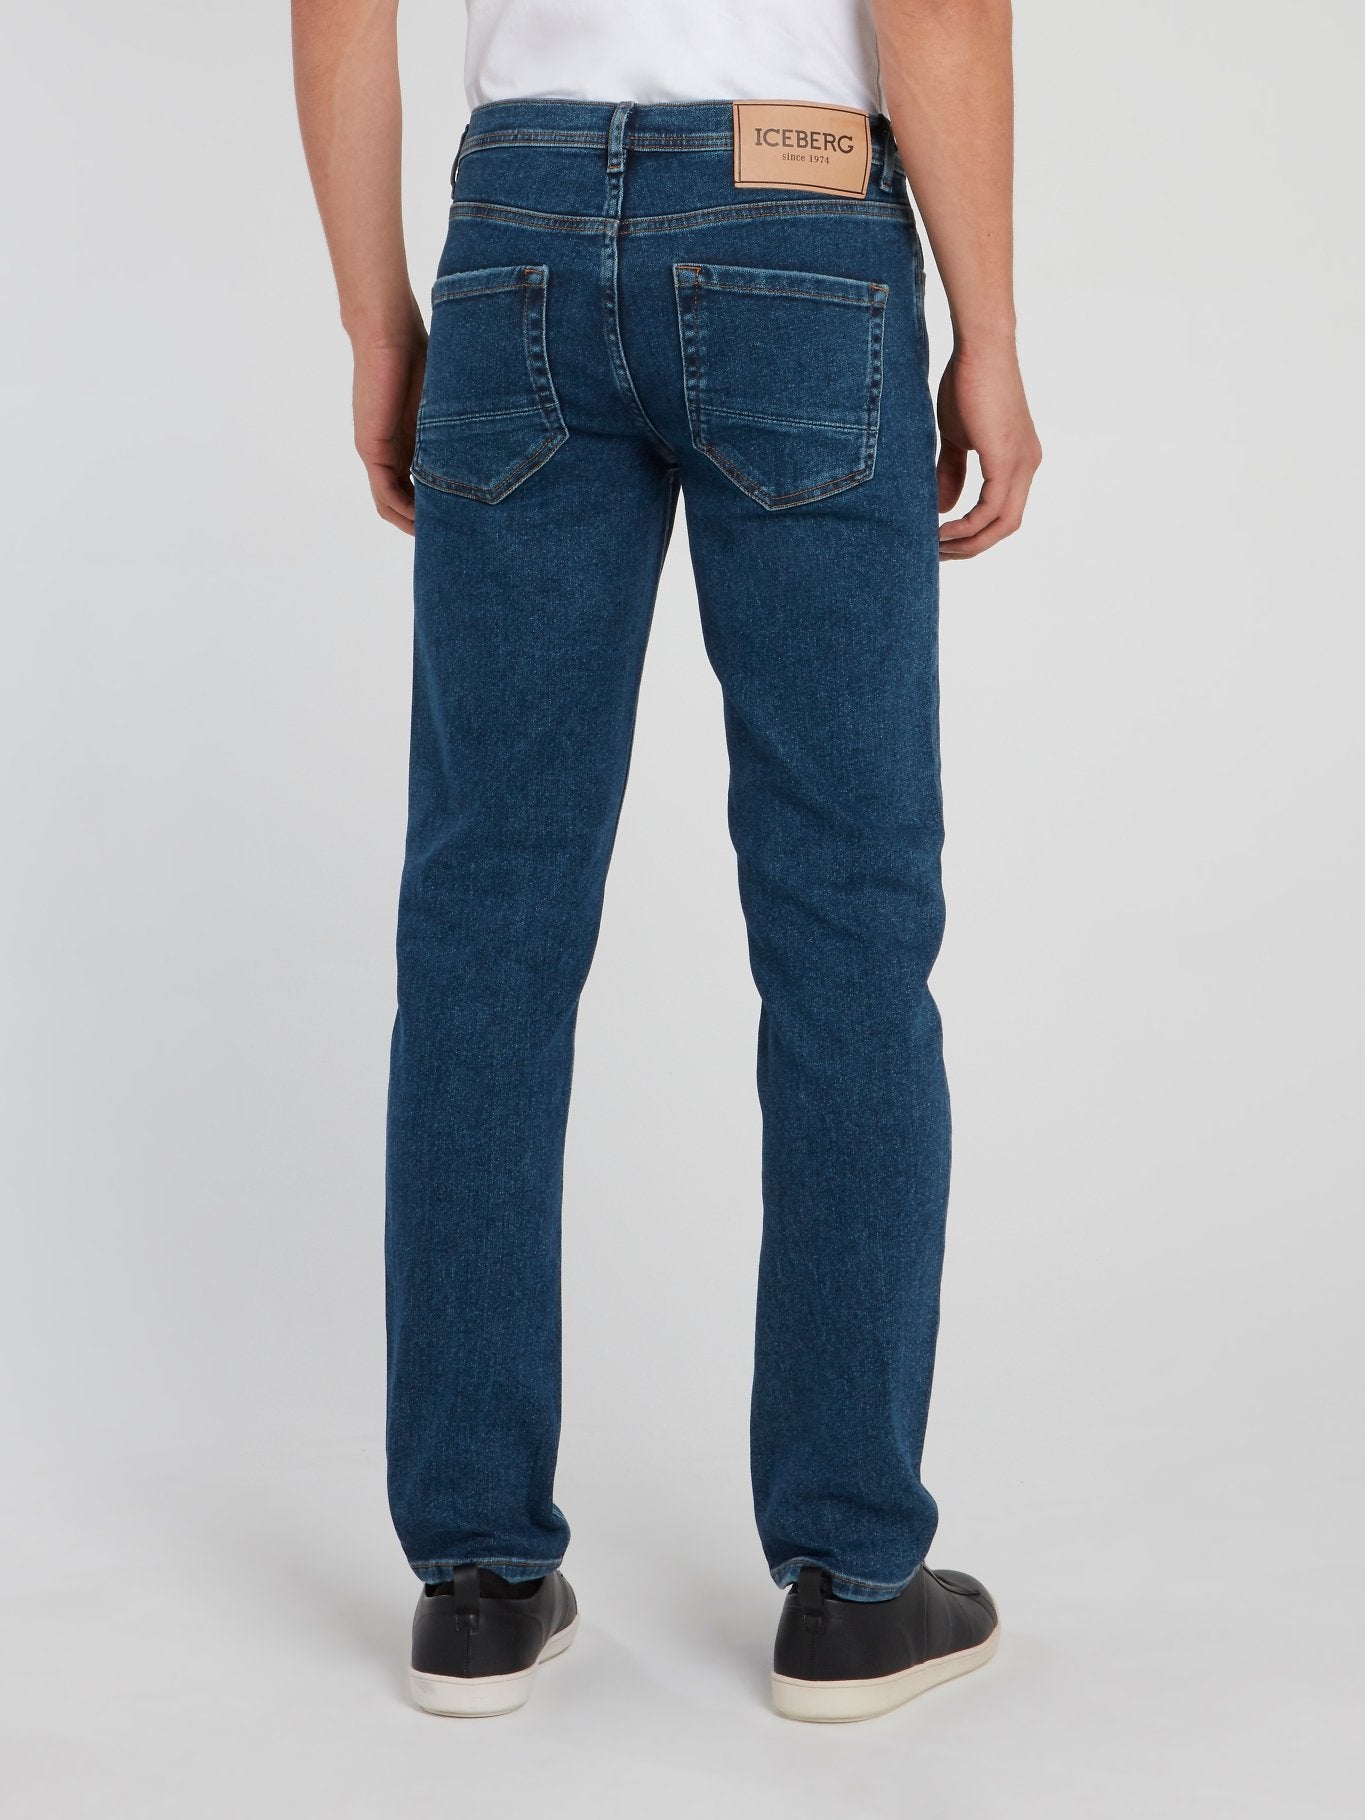 Classic Navy Denim Jeans